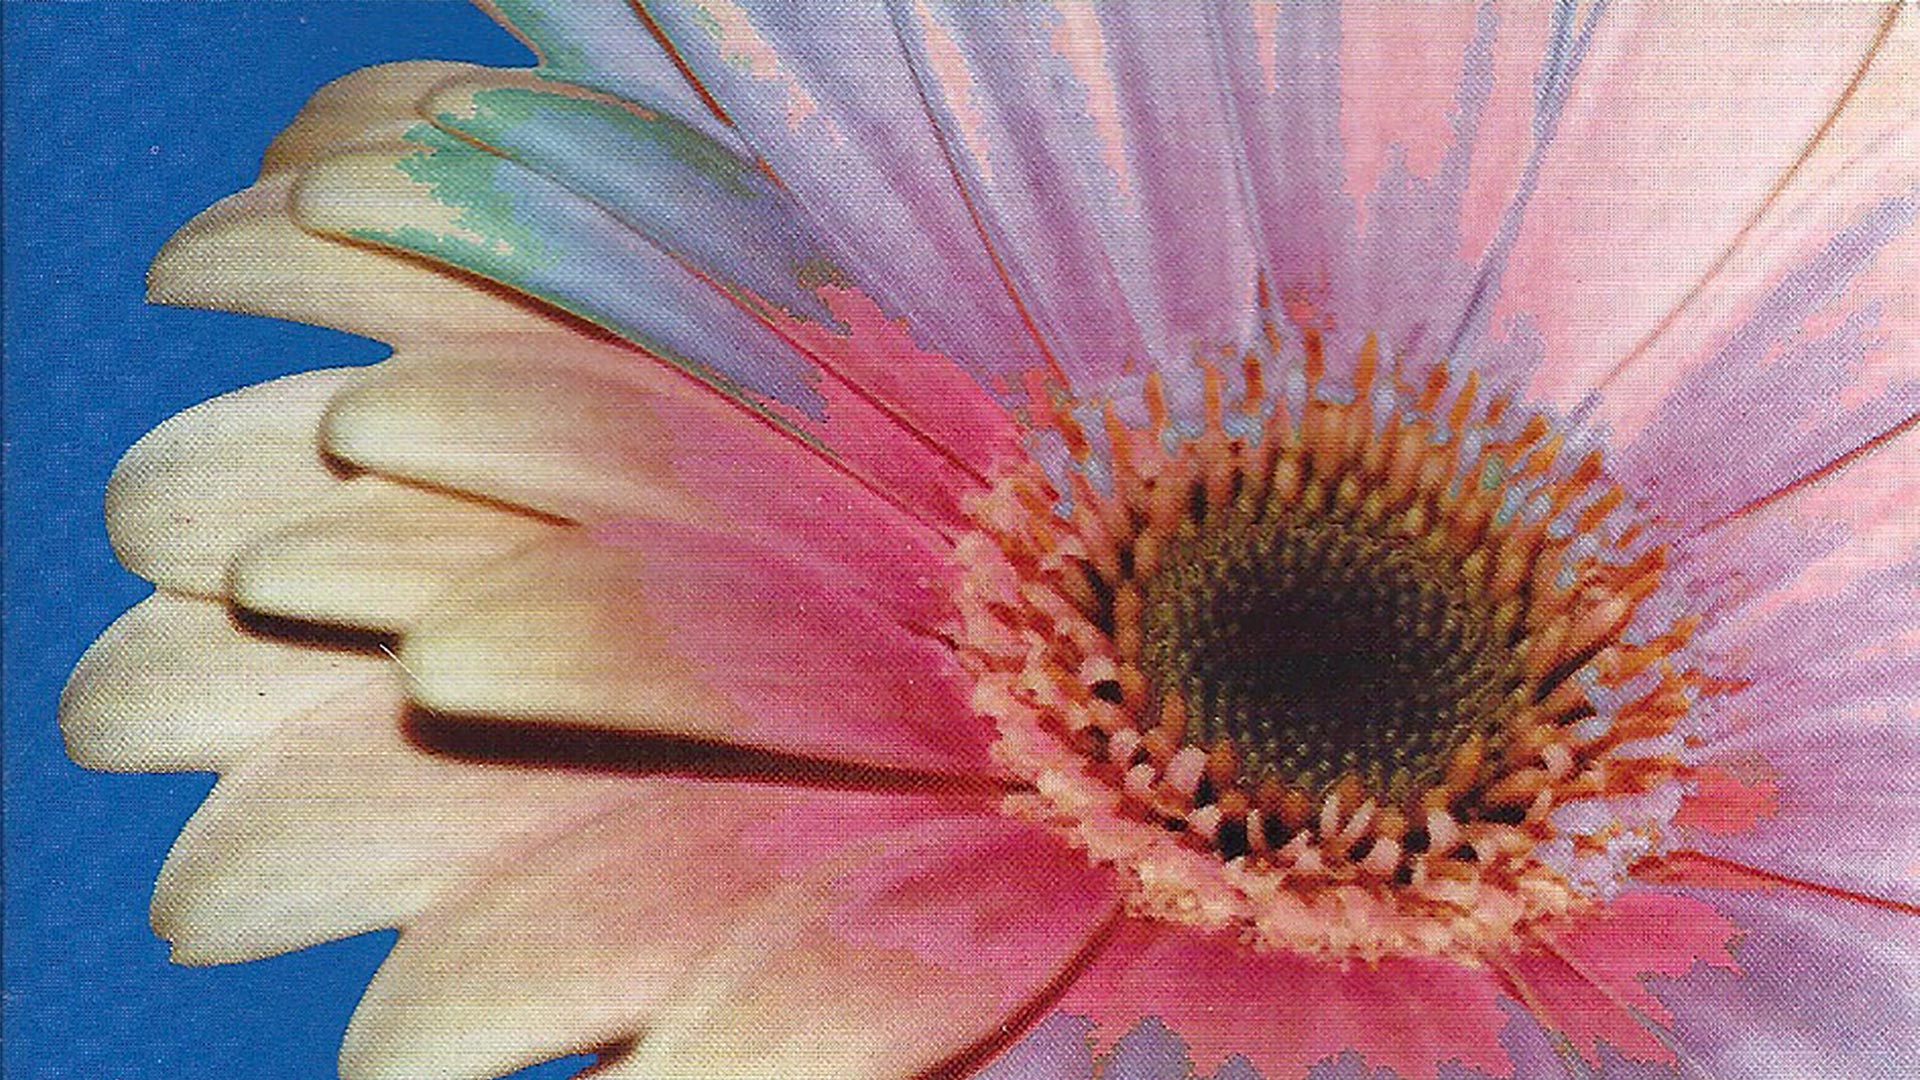 Burke Ingraffia's album cover with flower